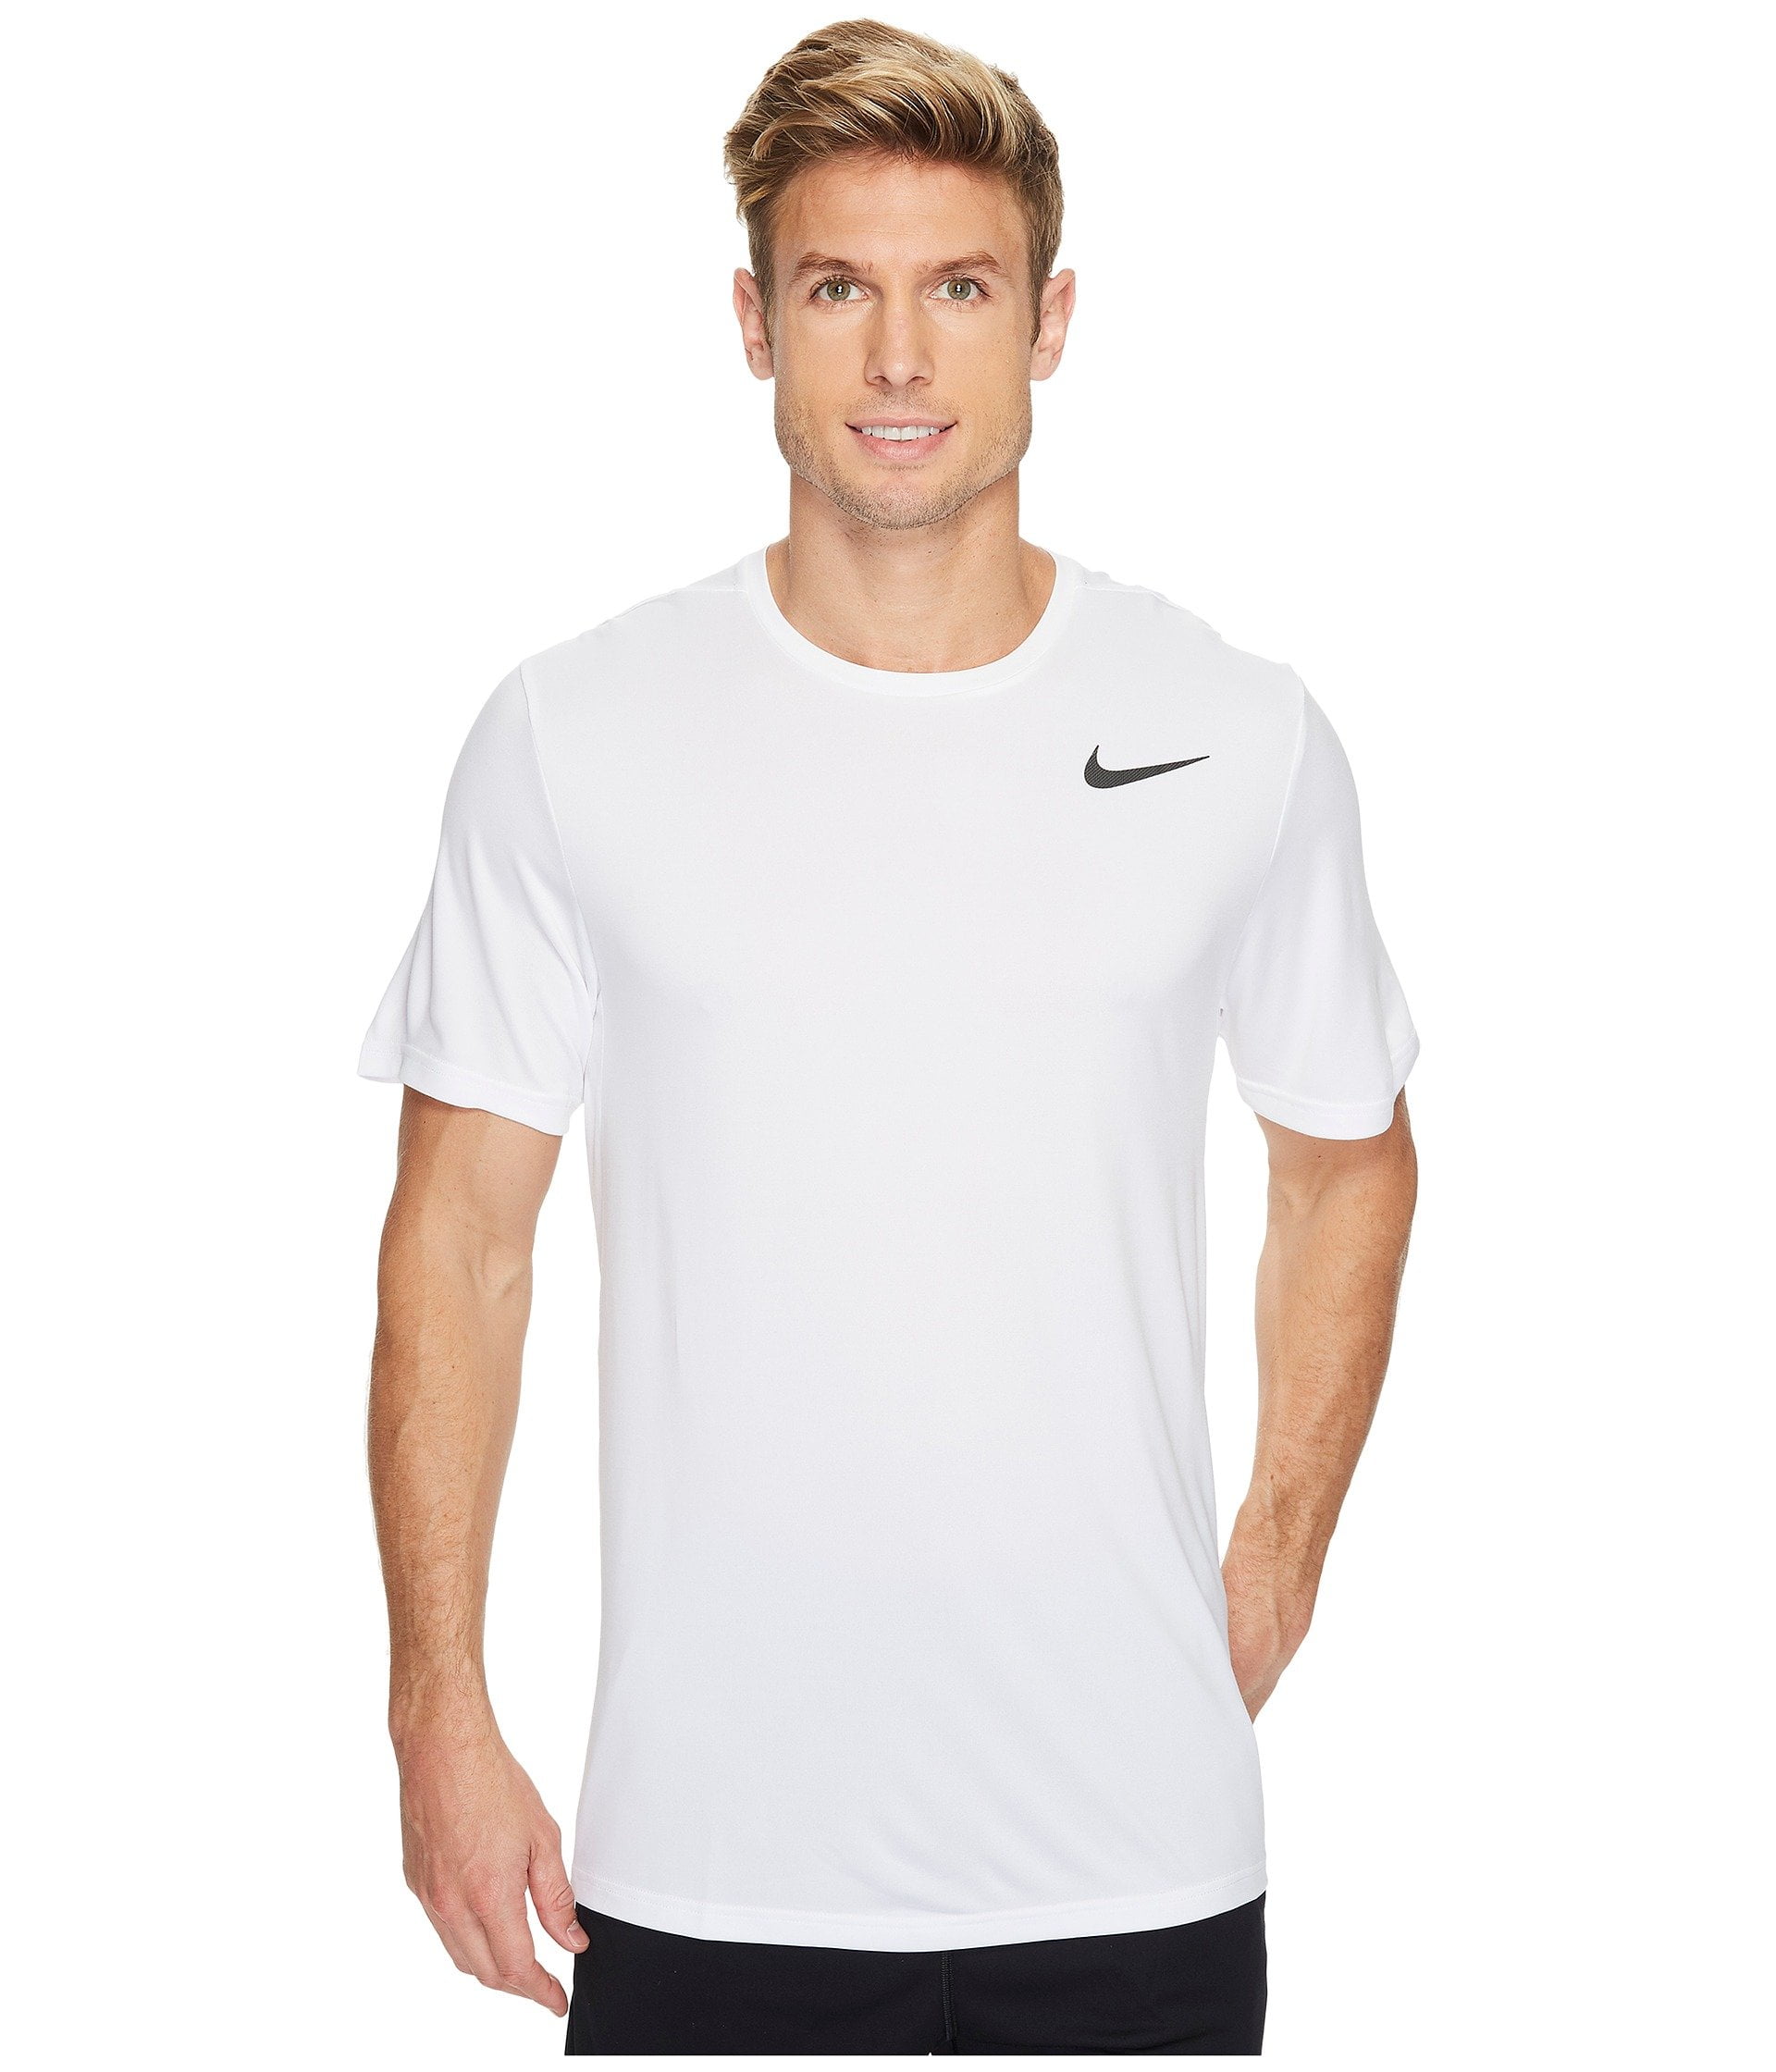 Nike Men's Training T-Shirt White - Walmart.com